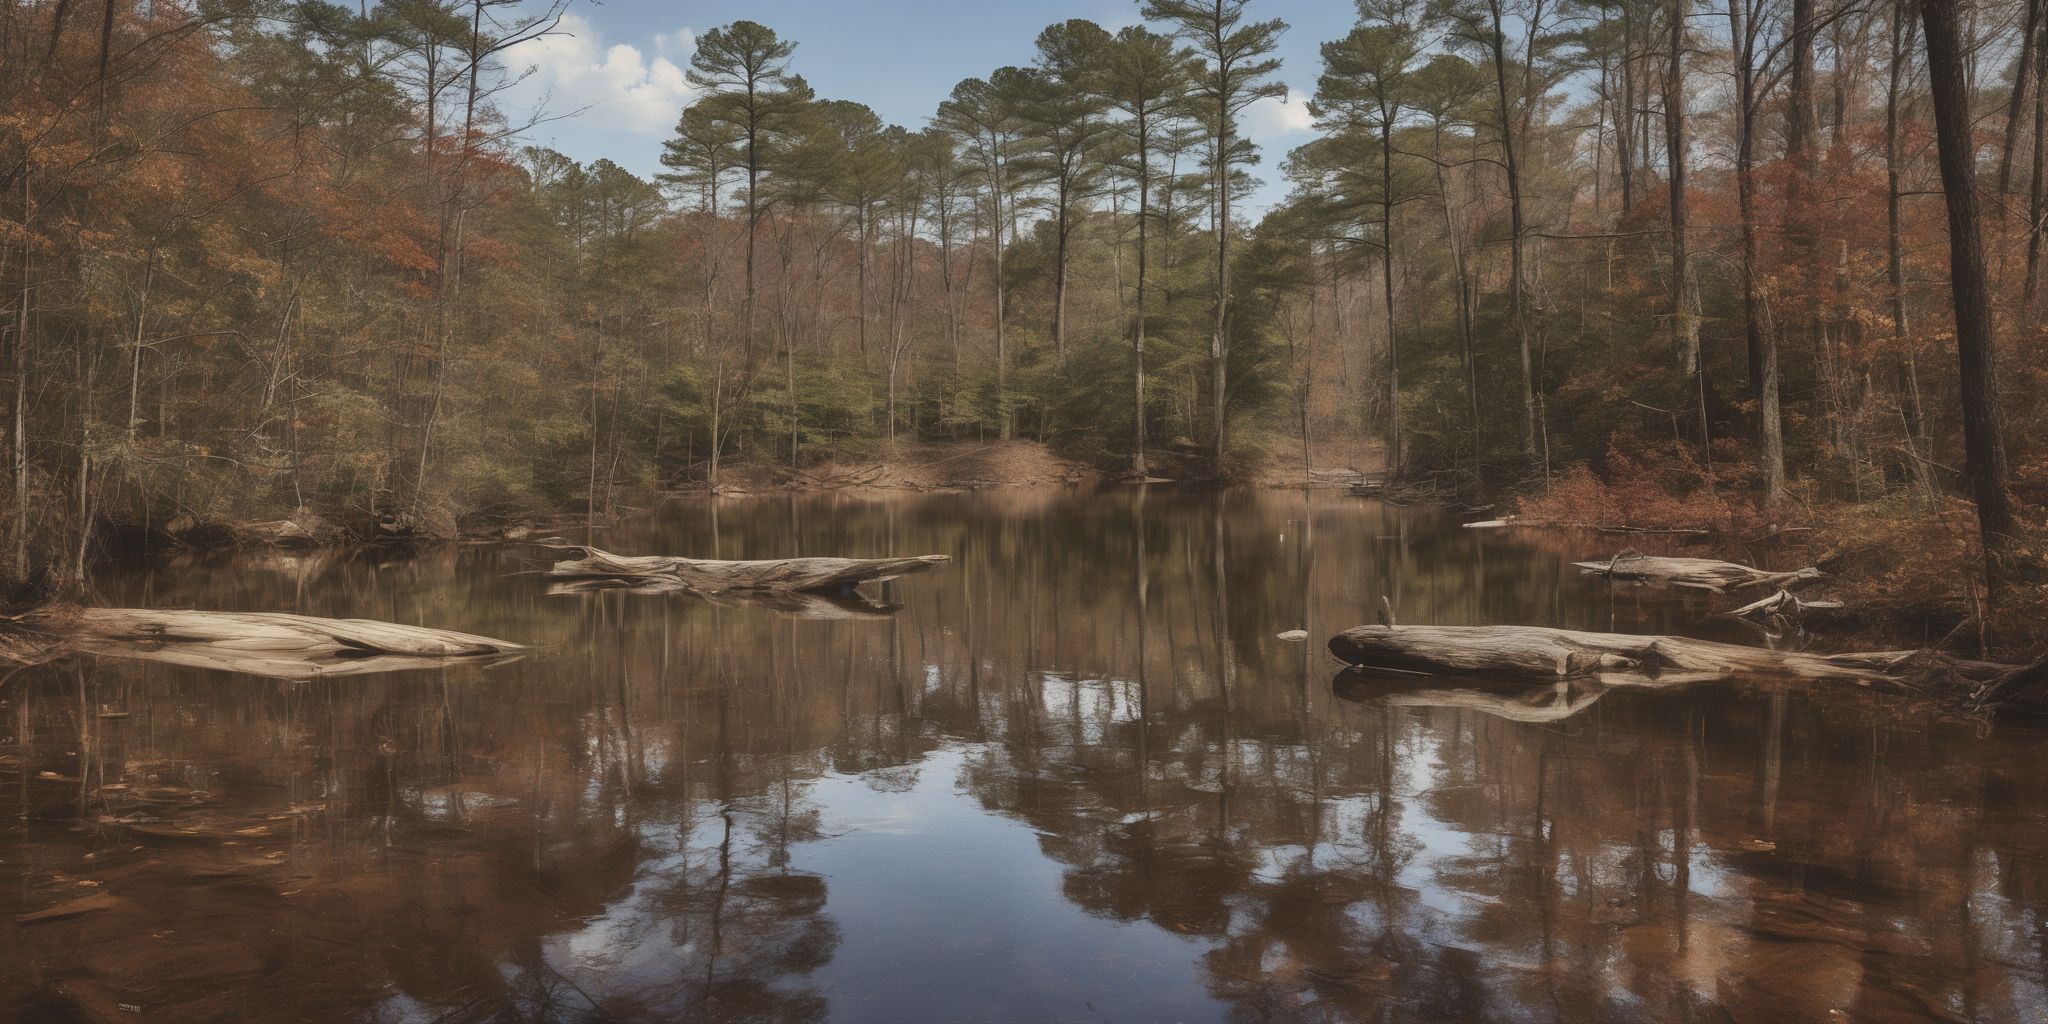 North Carolina  in realistic, photographic style